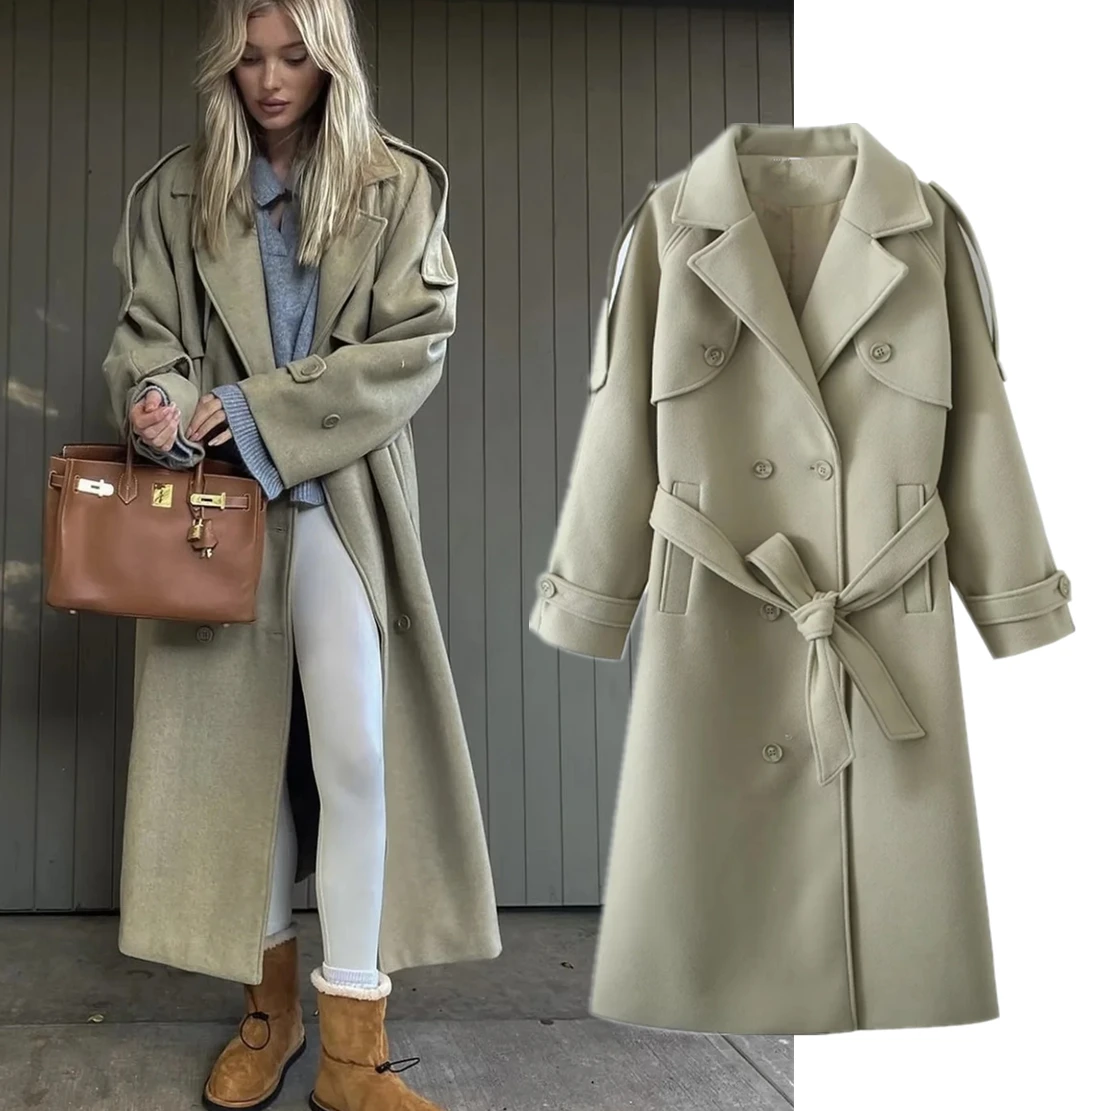 Elmsk Ins Blogger Vintage Loose Ligh Green Long Jacket Fashion Trench Coat Overcoat Women